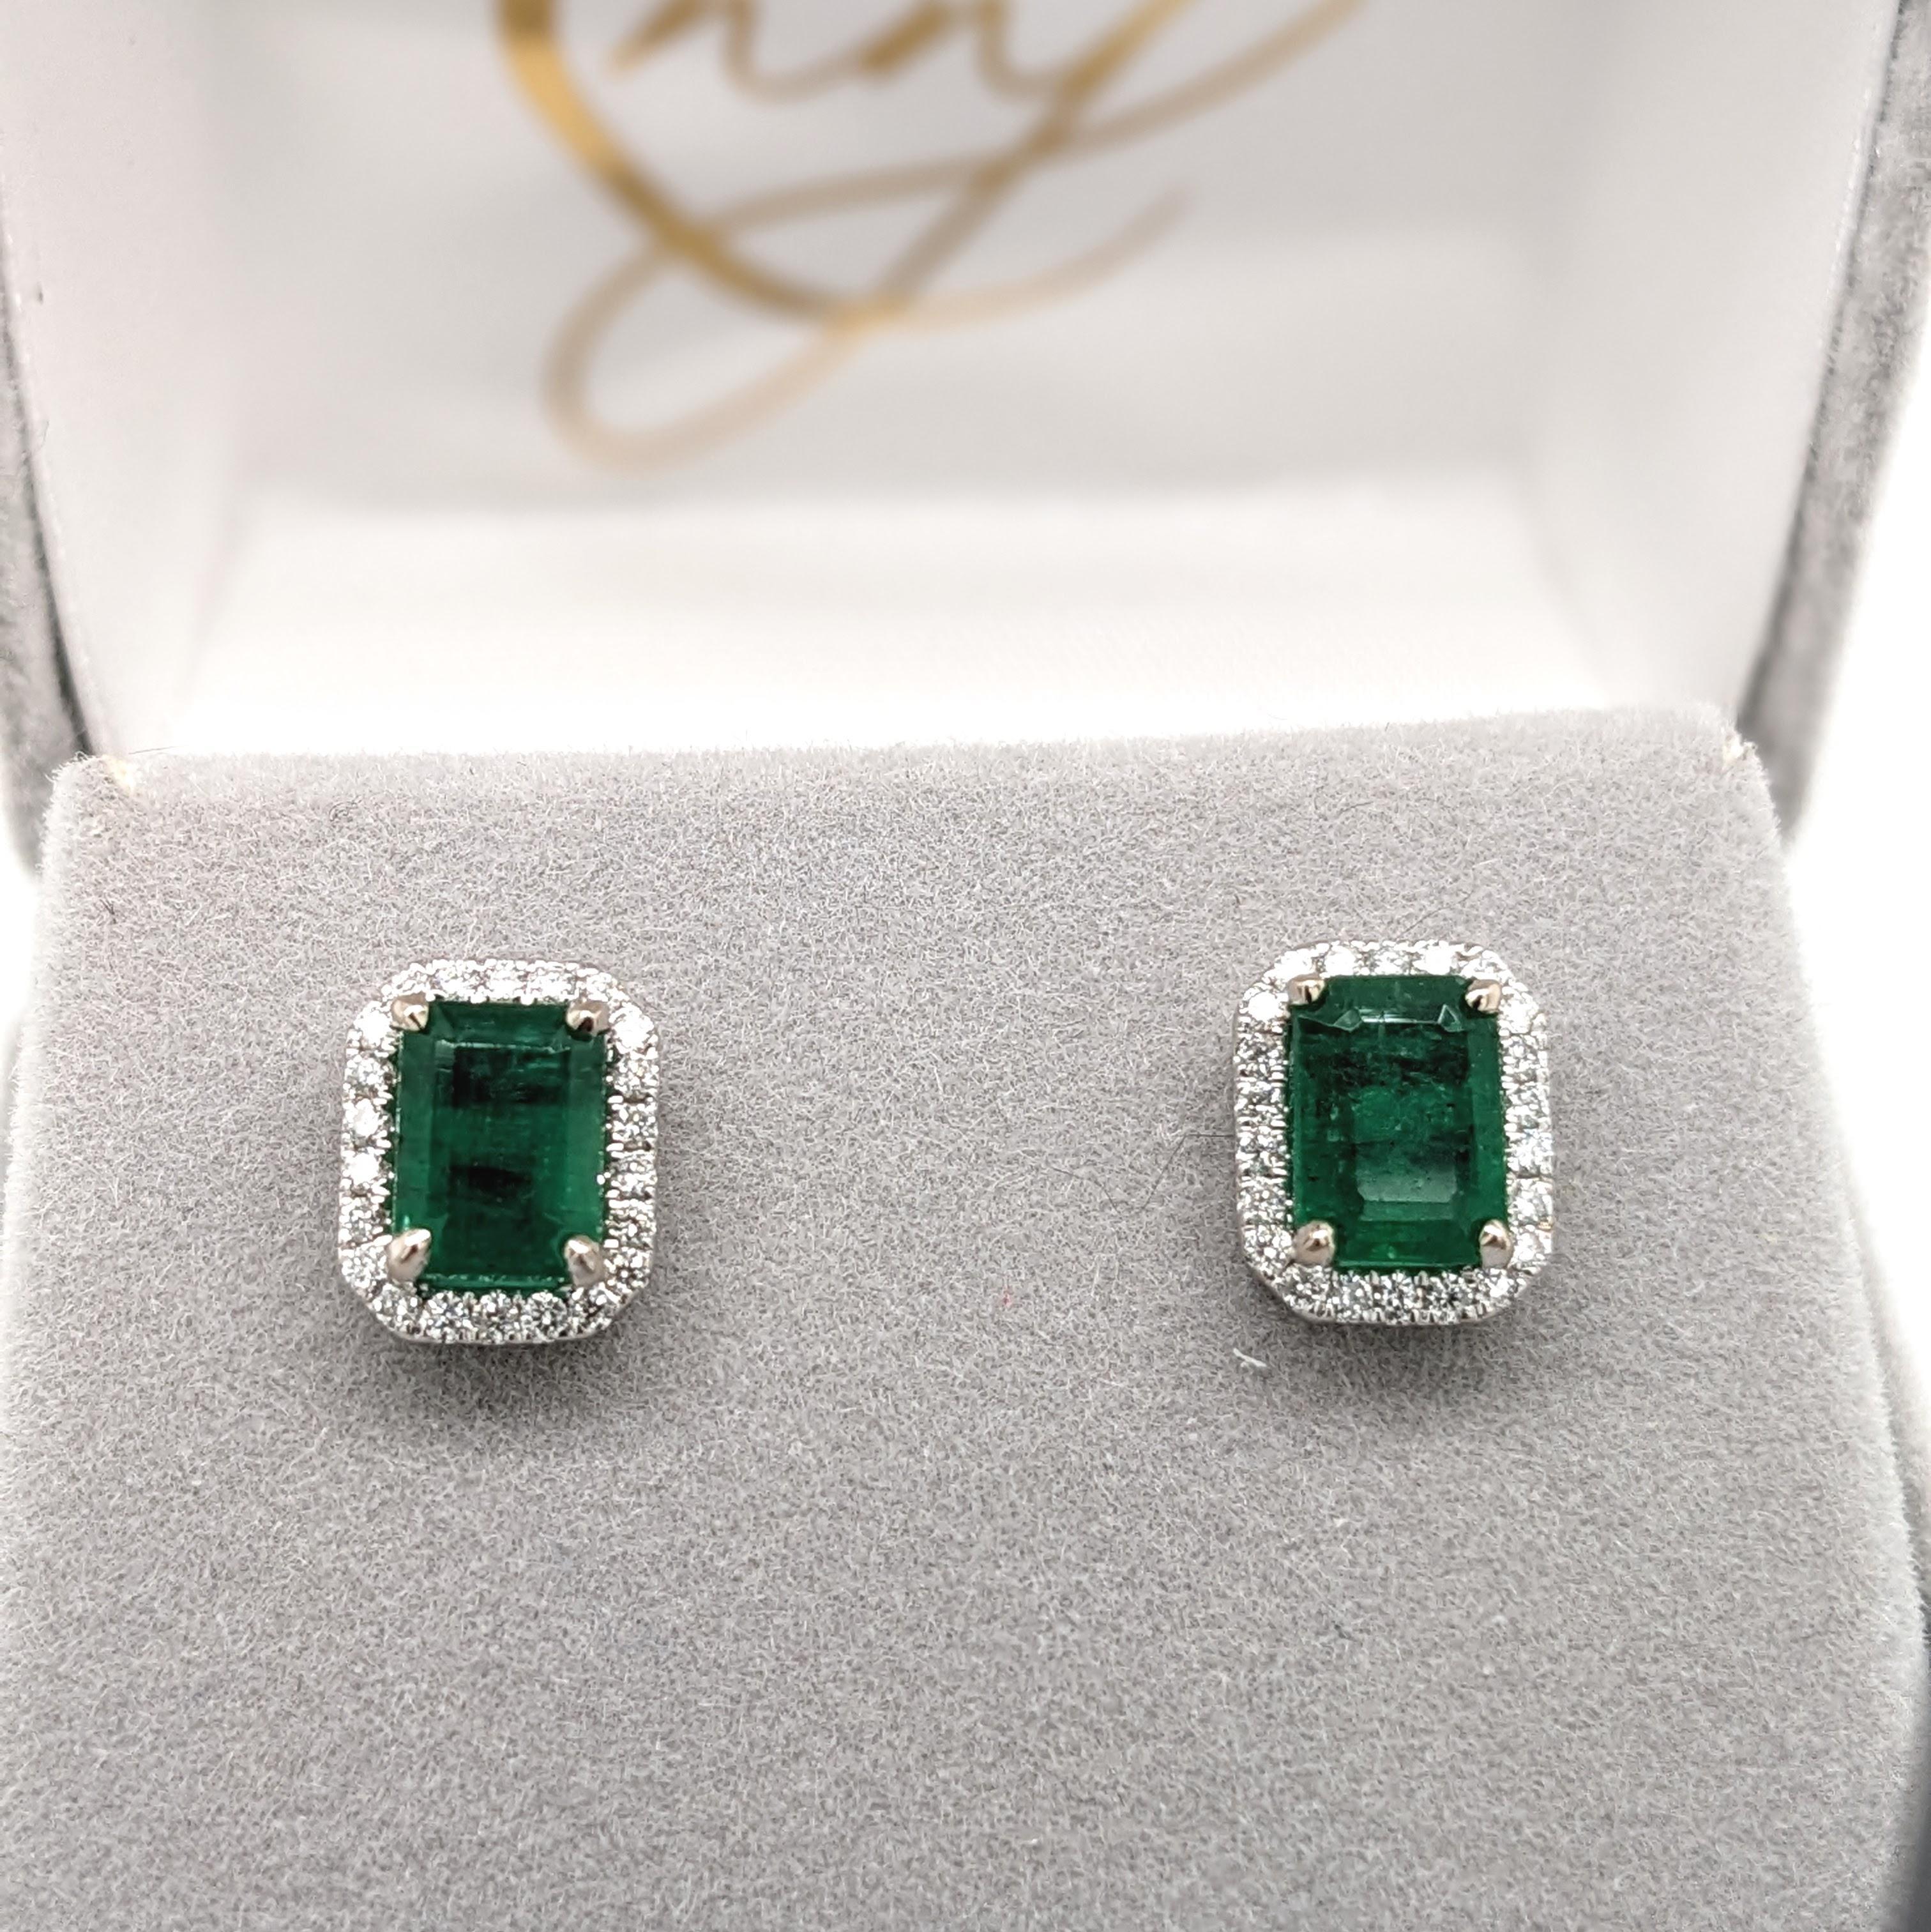 2.3ct Zambian Emerald Stud Earrings w Natural Diamond Halo in Solid 14K Gold 7x5 2